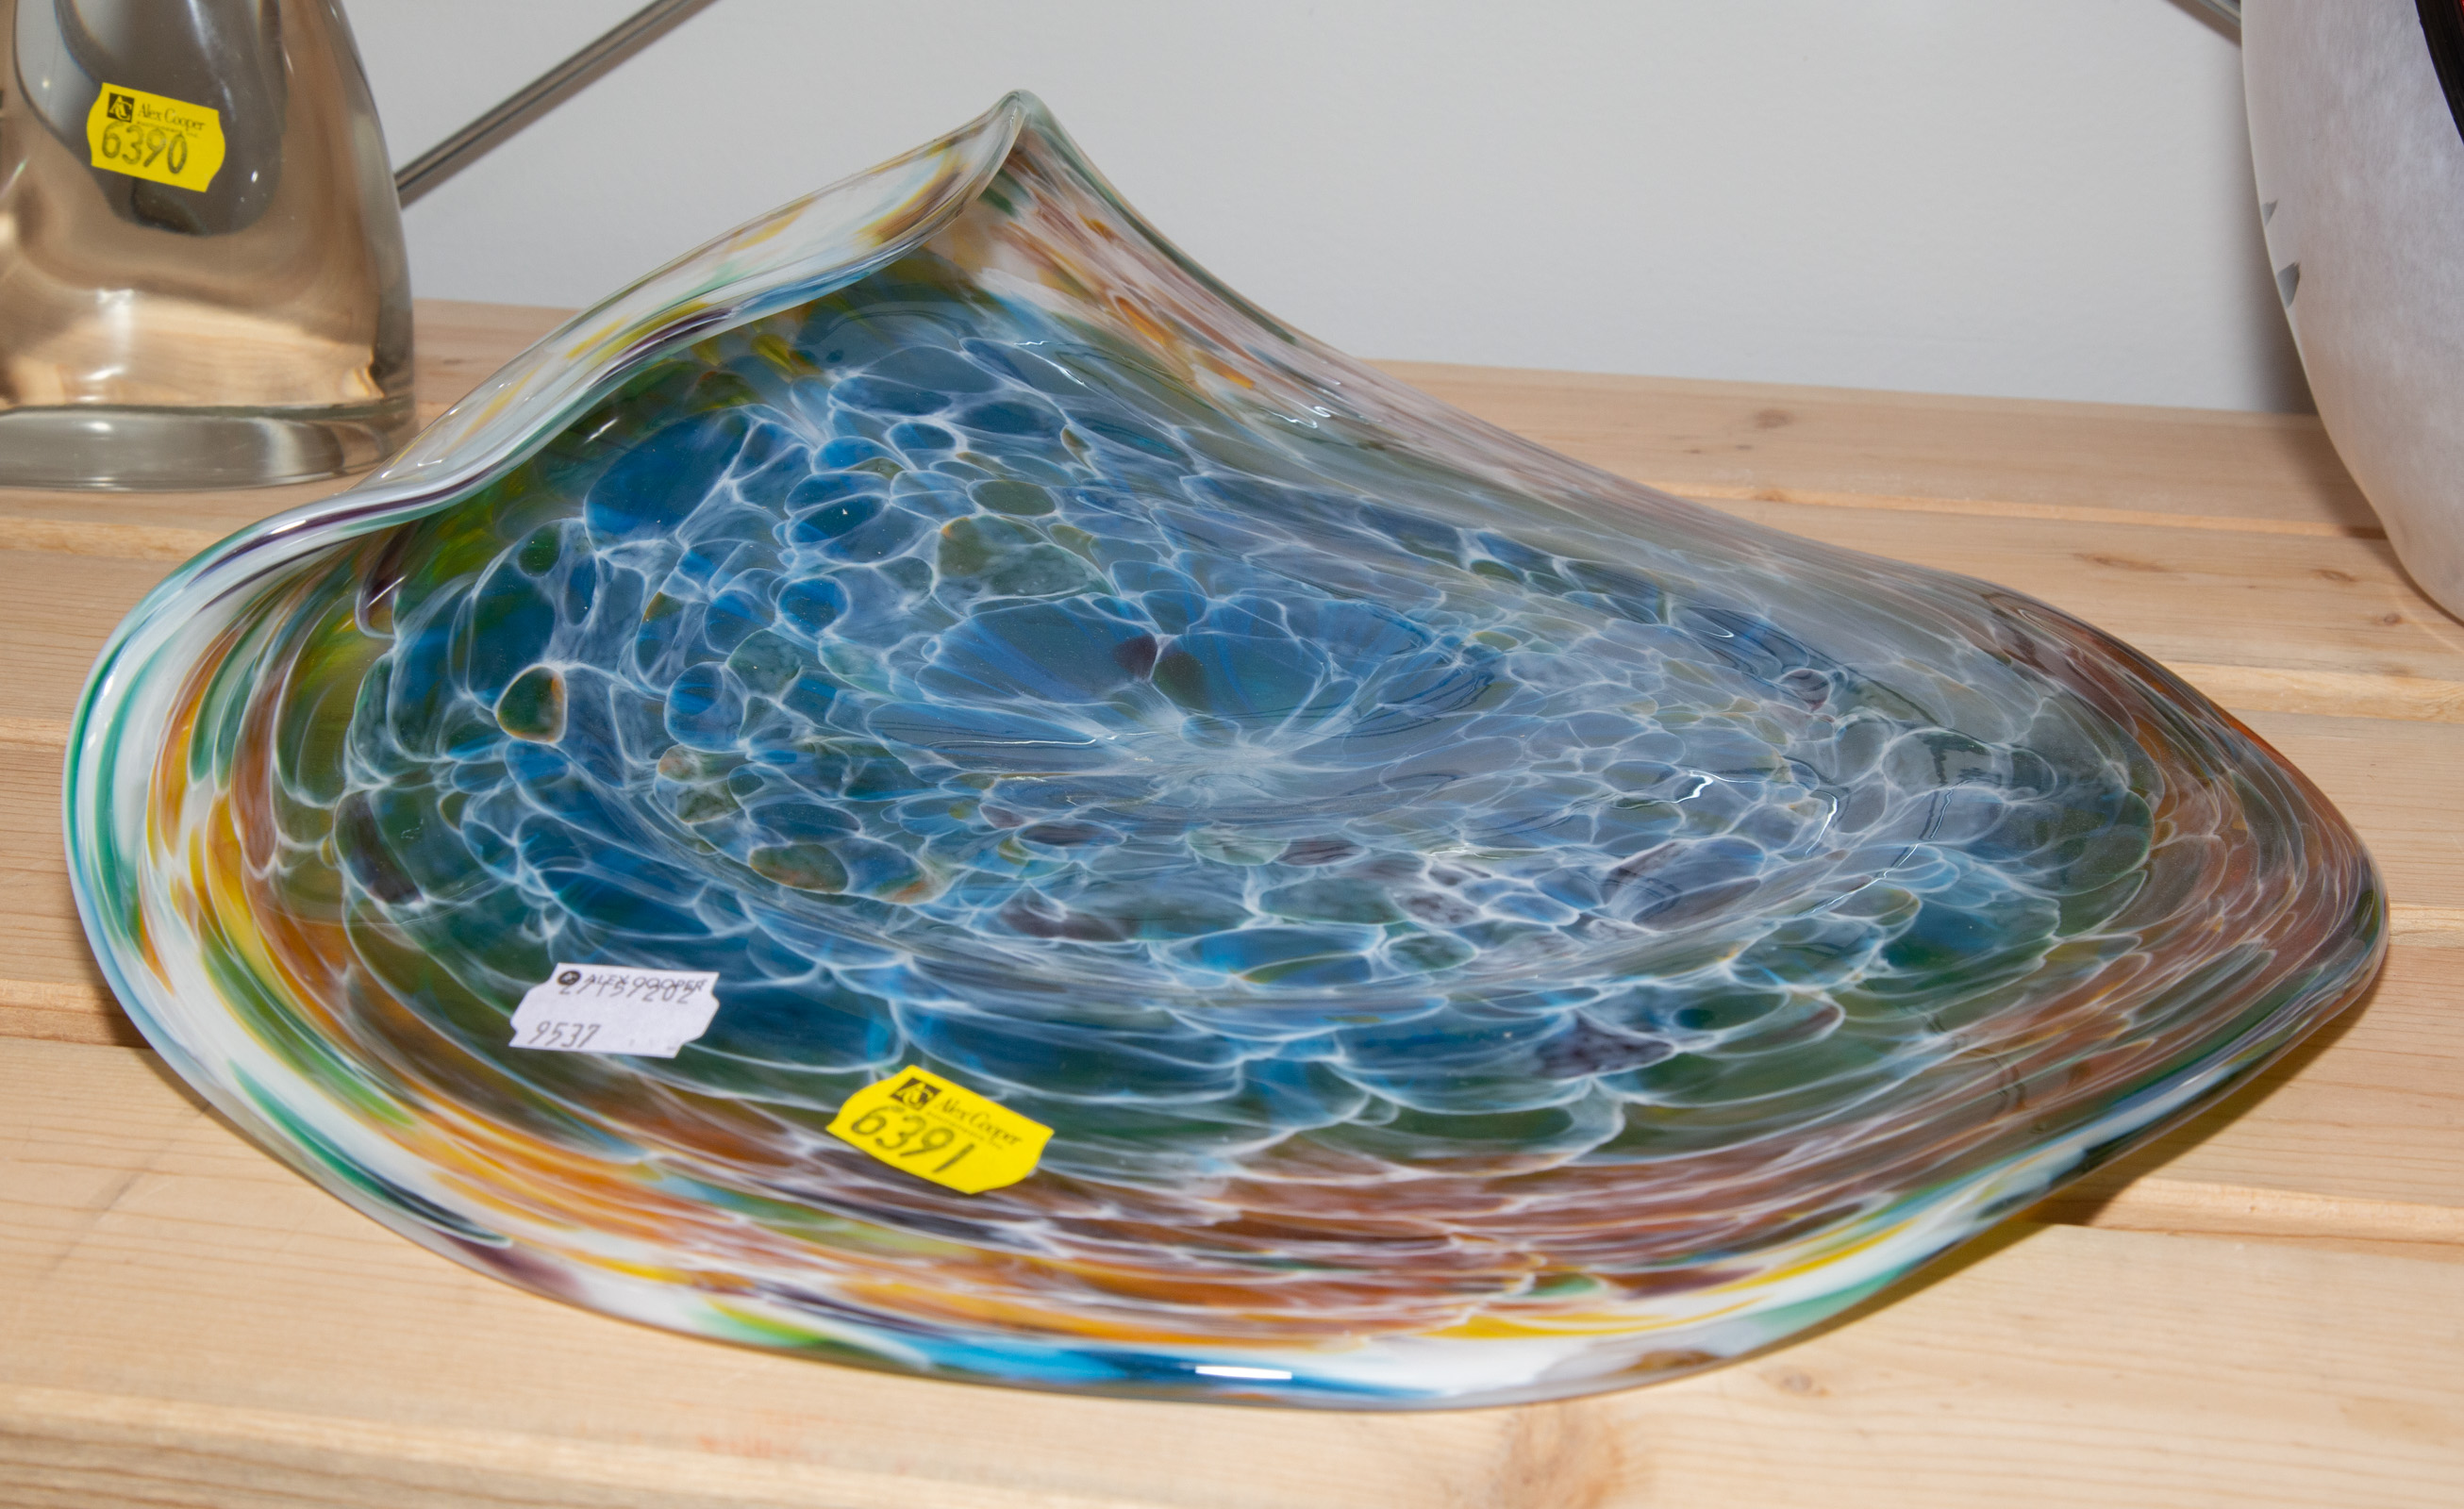 MOON WAVES ART GLASS BY JOHN MOONEY 3105c7